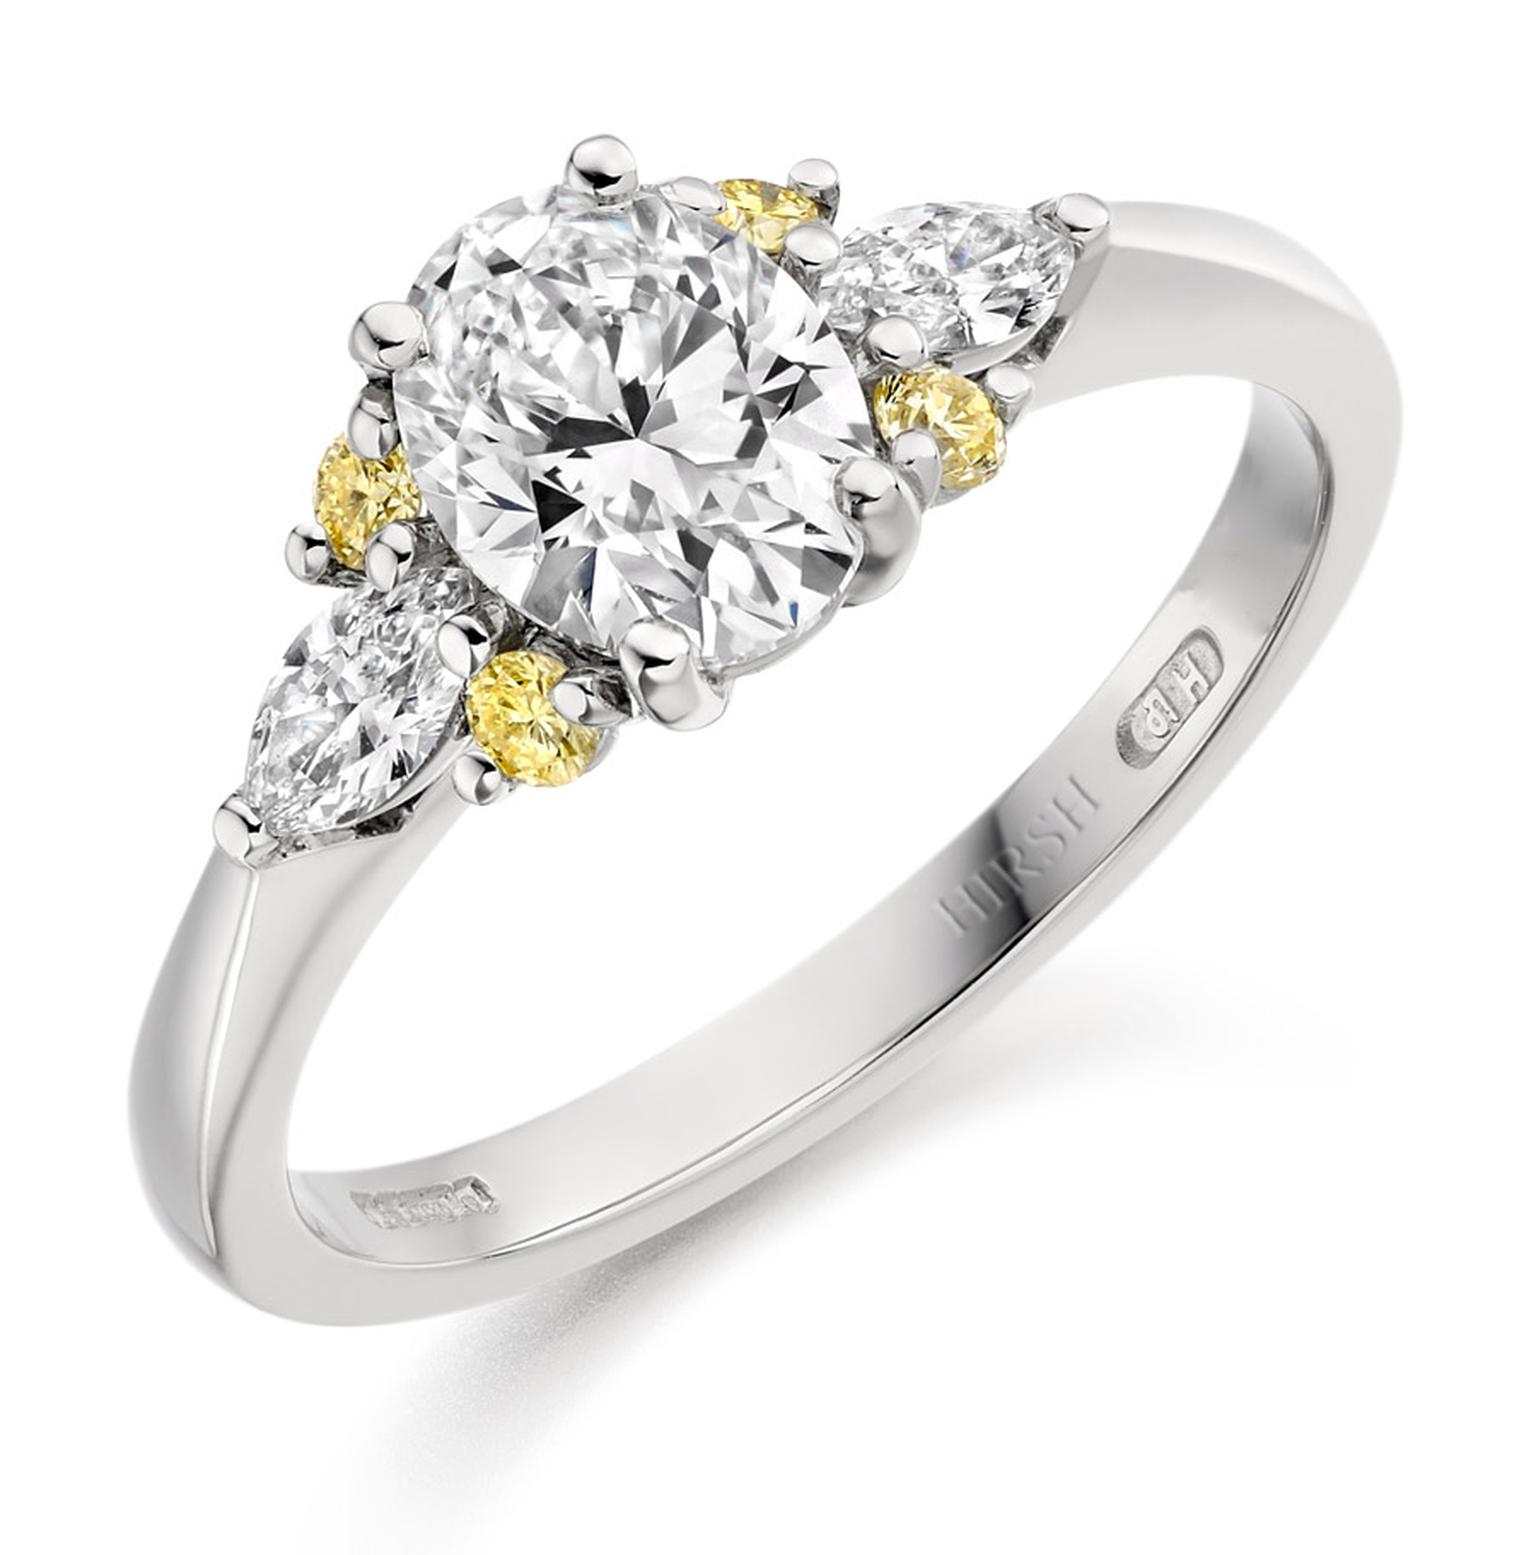 Burlington-Arcade-Papillon-ring-by-Hirsh-in-platinum-with-natural-yellow-diamonds.jpg